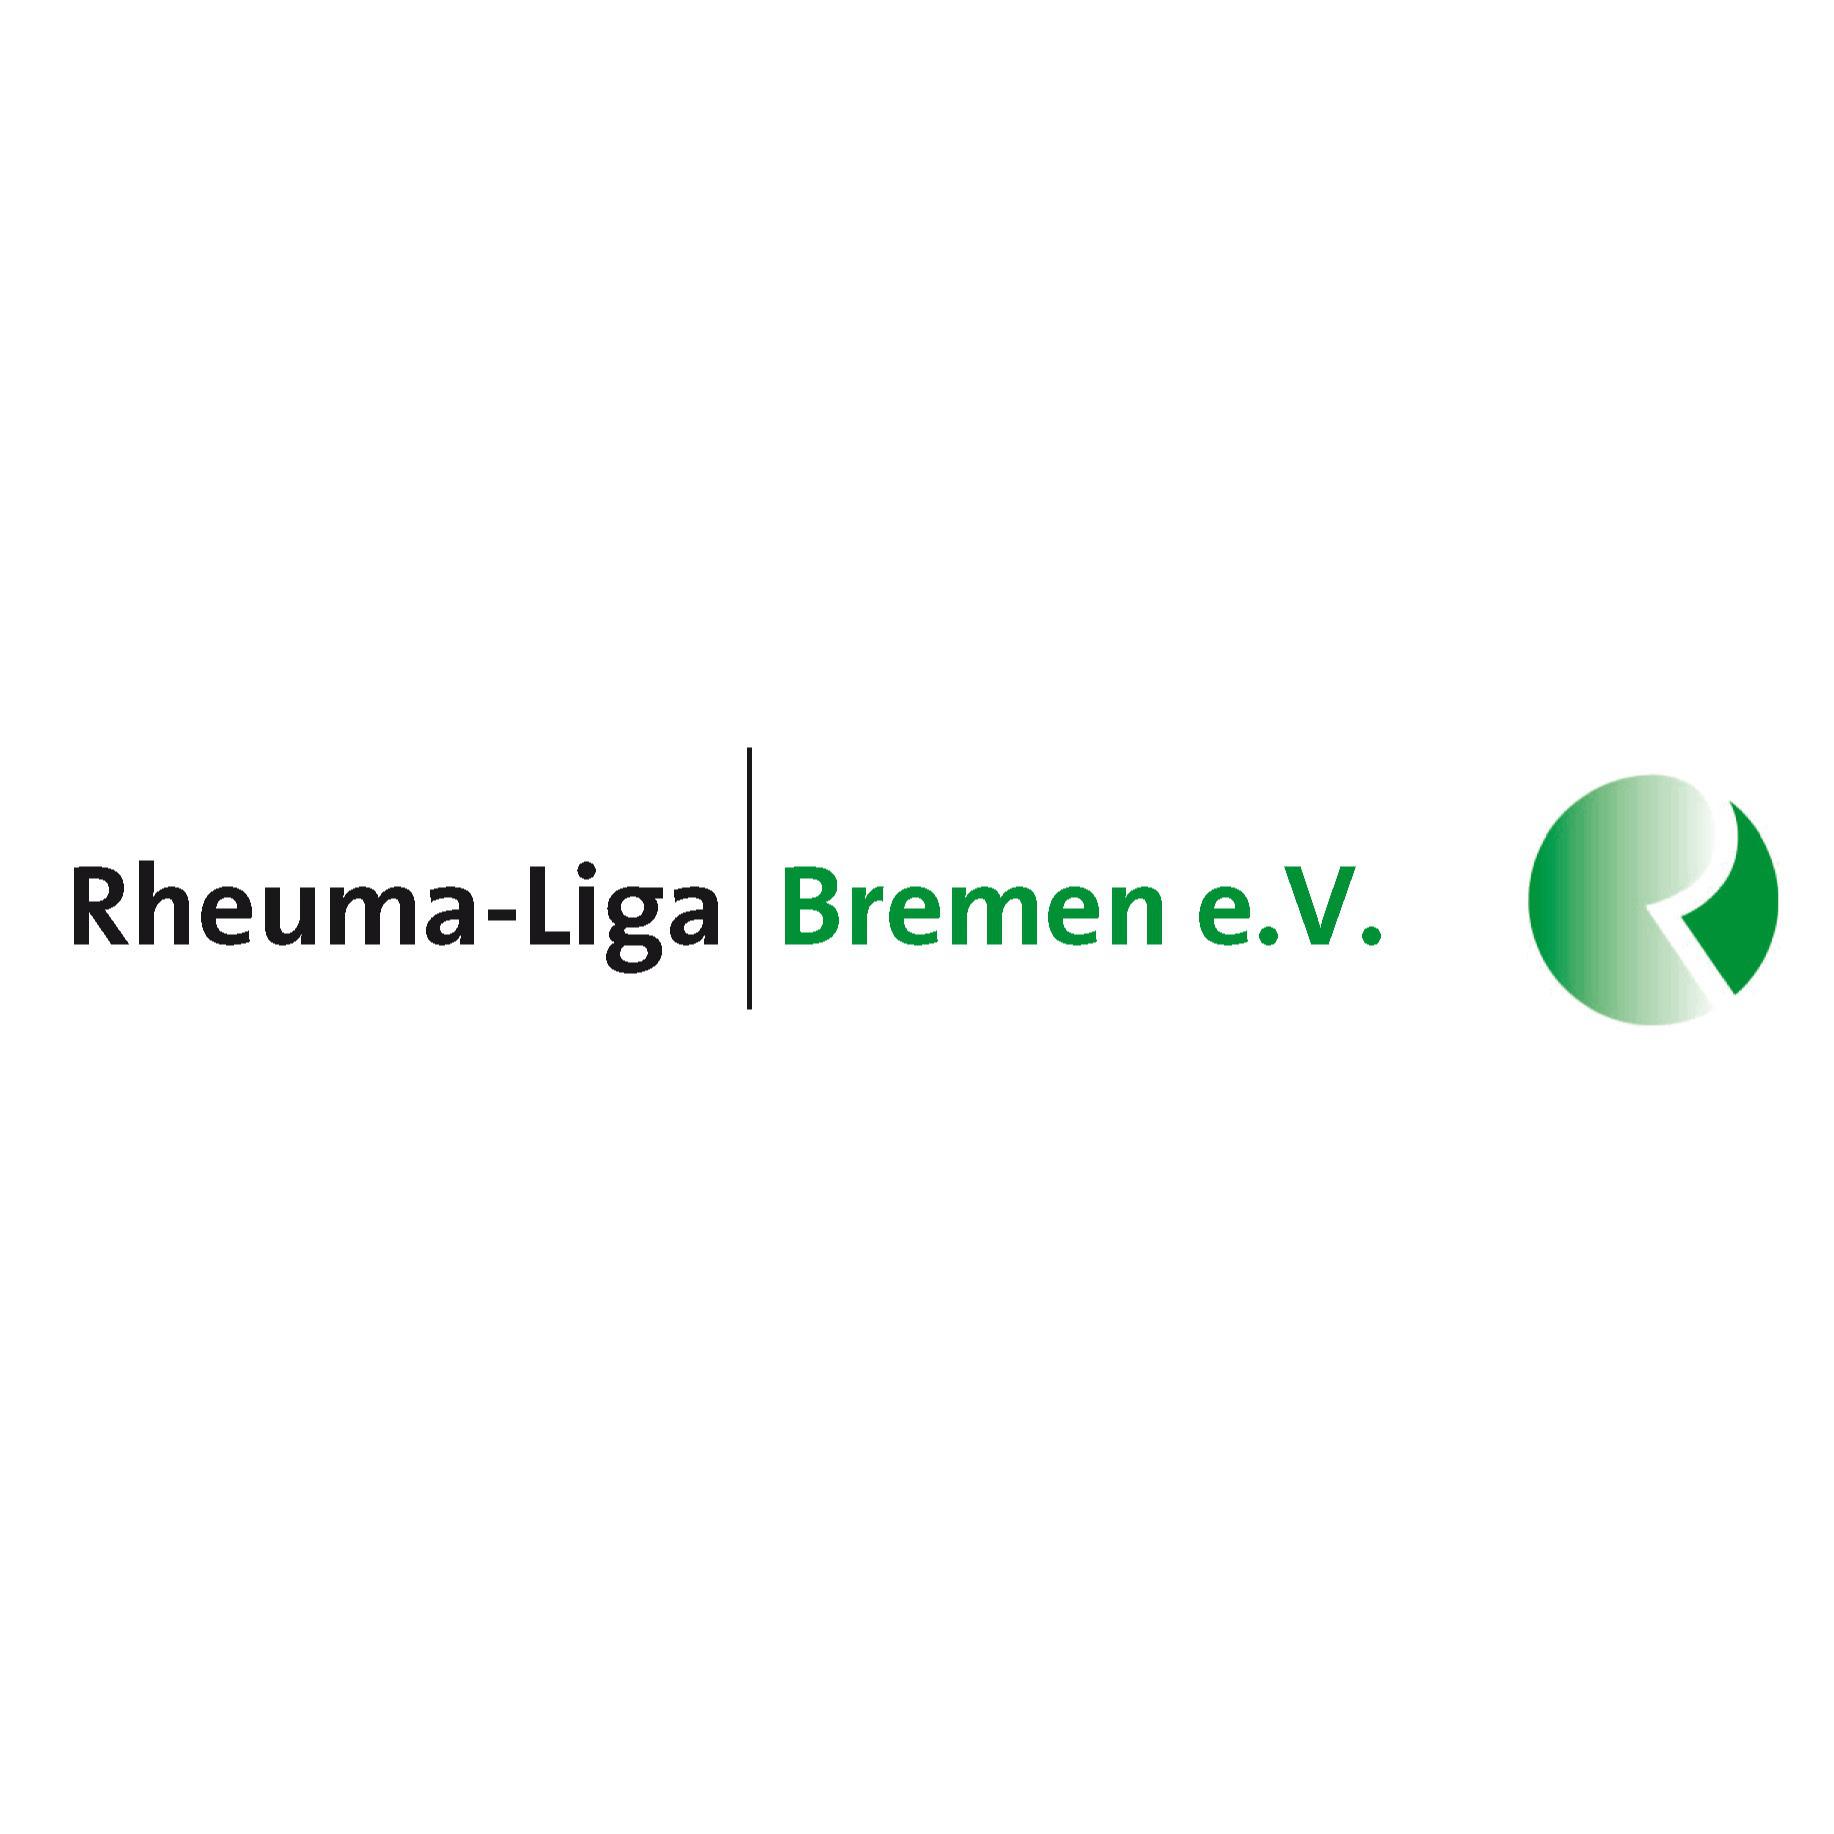 Rheuma-Liga Bremen e. V. in Bremen - Logo